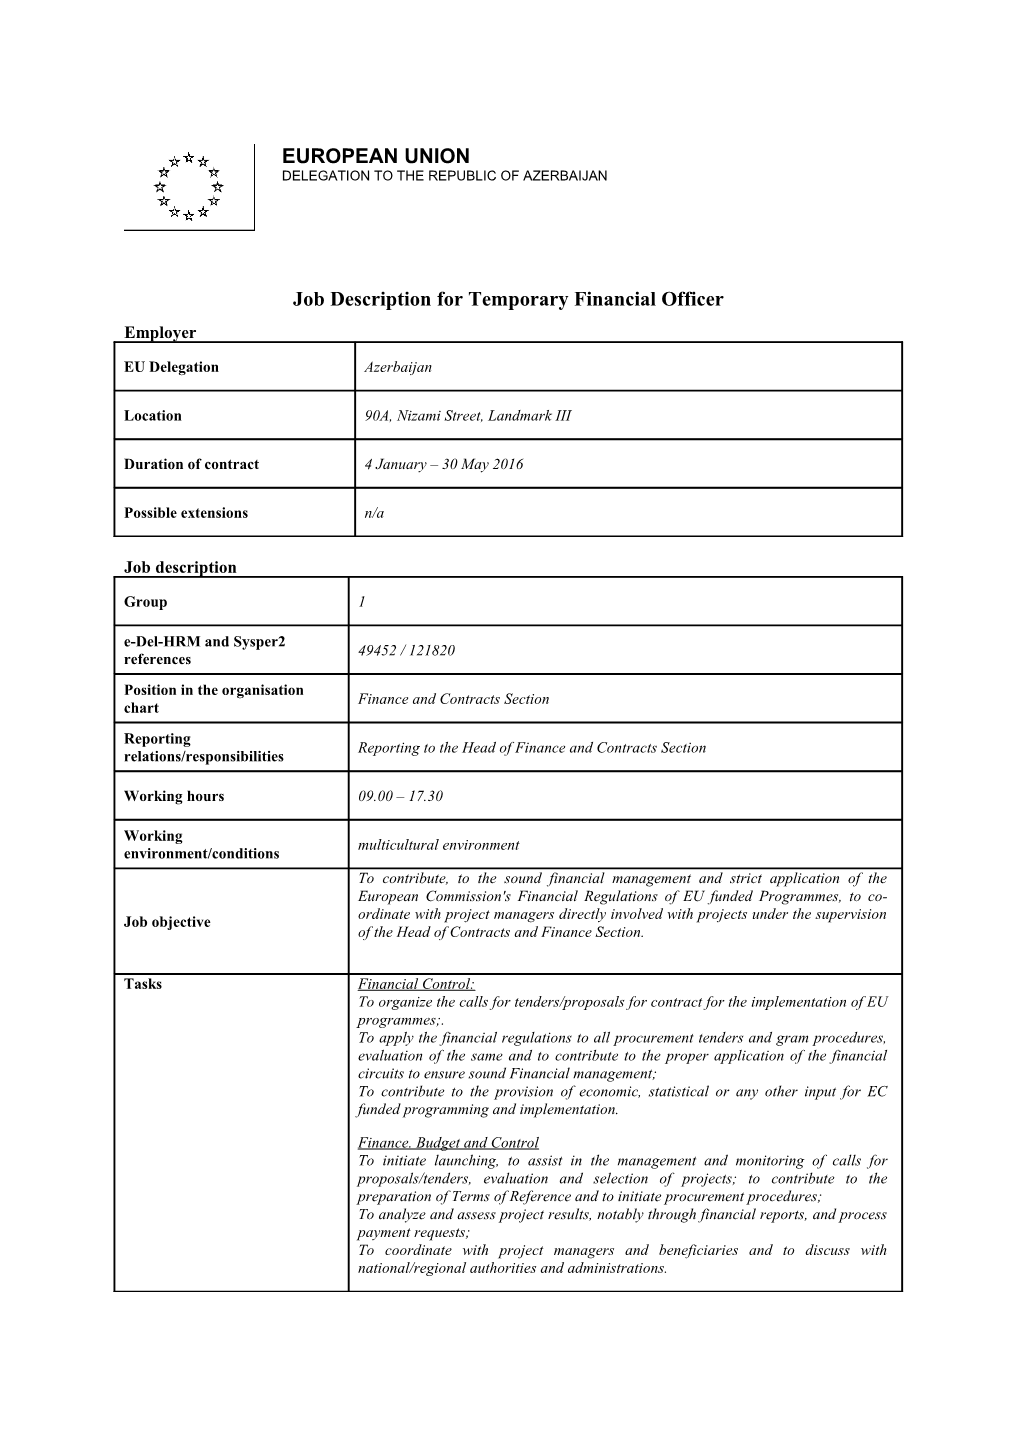 Job Description for Temporary Financial Officer